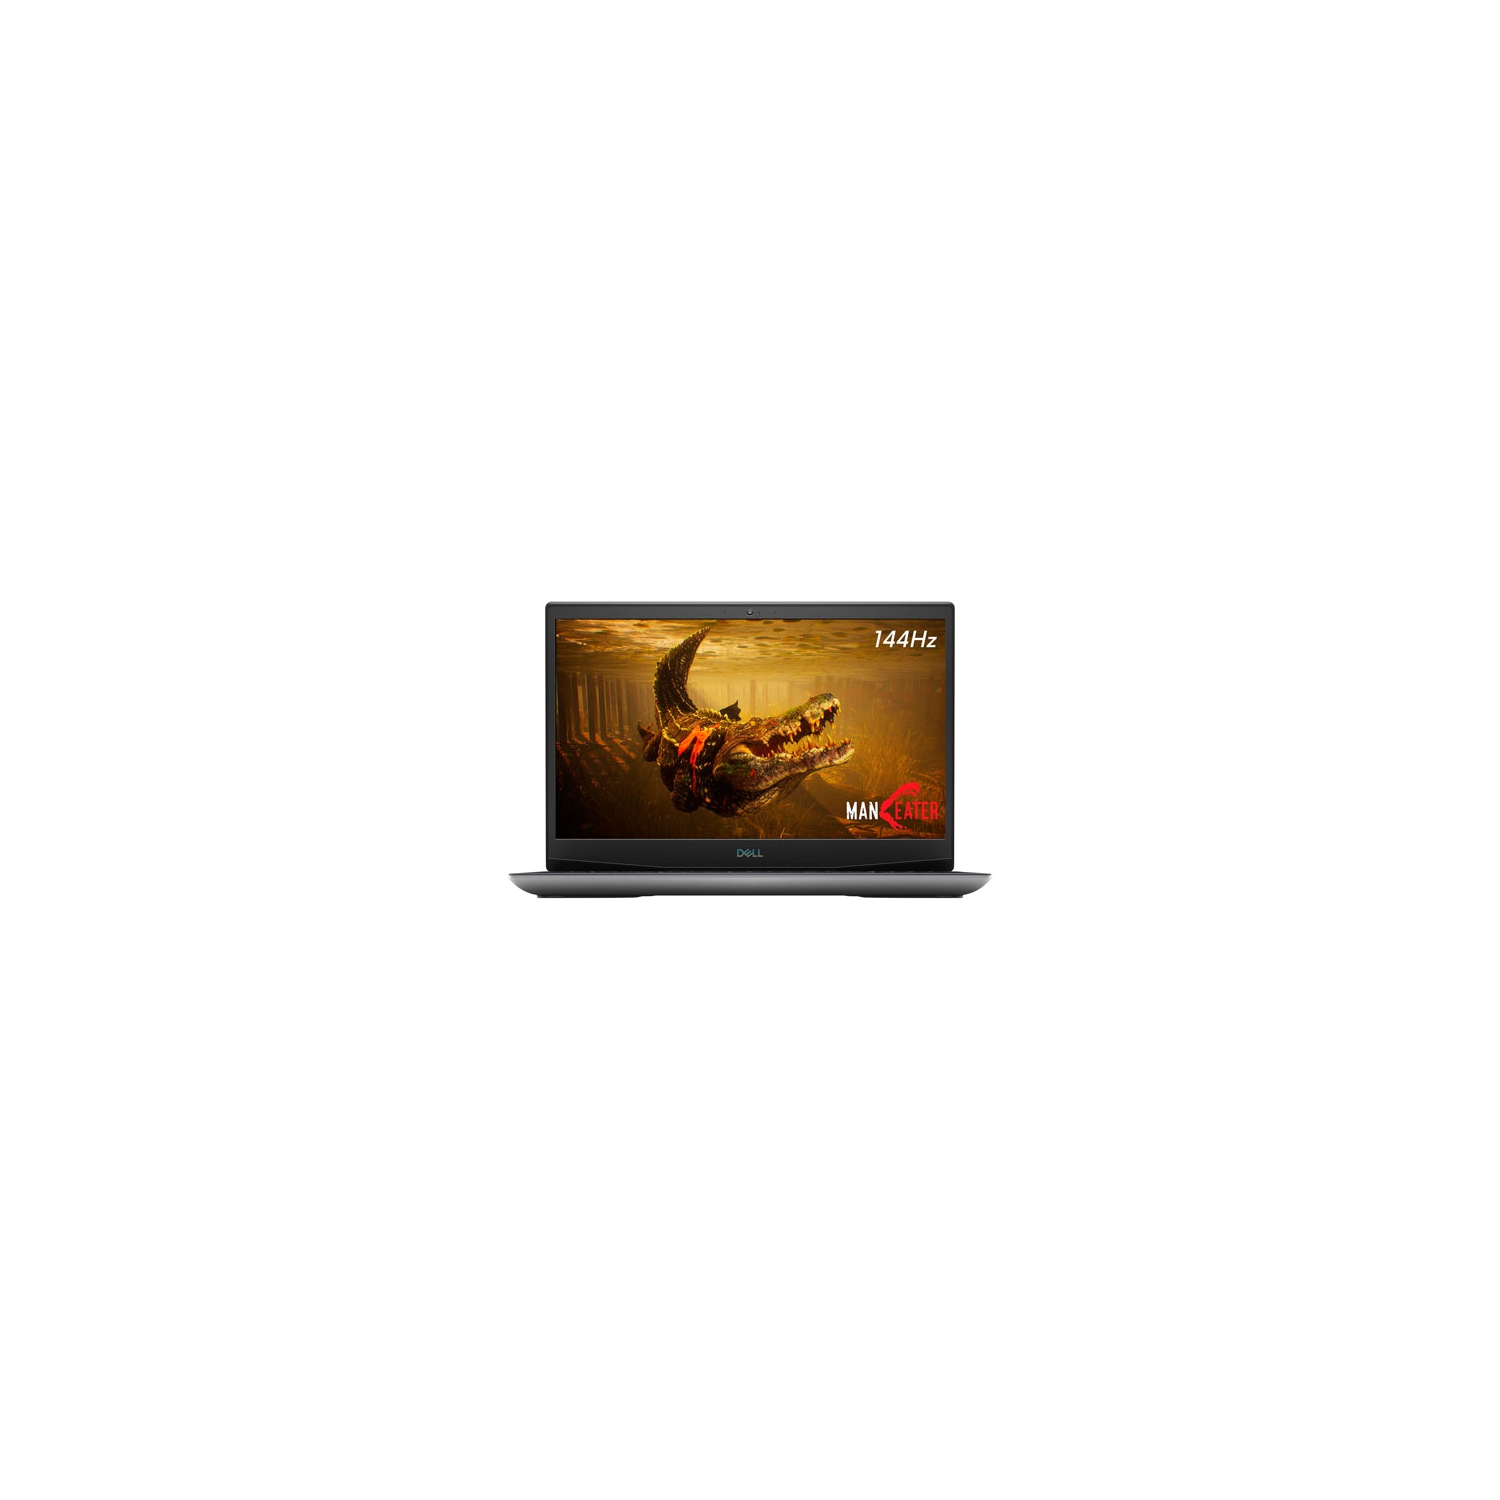 Dell G5 15.6" Gaming Laptop - Silver (AMD Ryzen 9 4900H/1TB SSD/16GB RAM/Radeon RX 5600M) - En - Refurbished